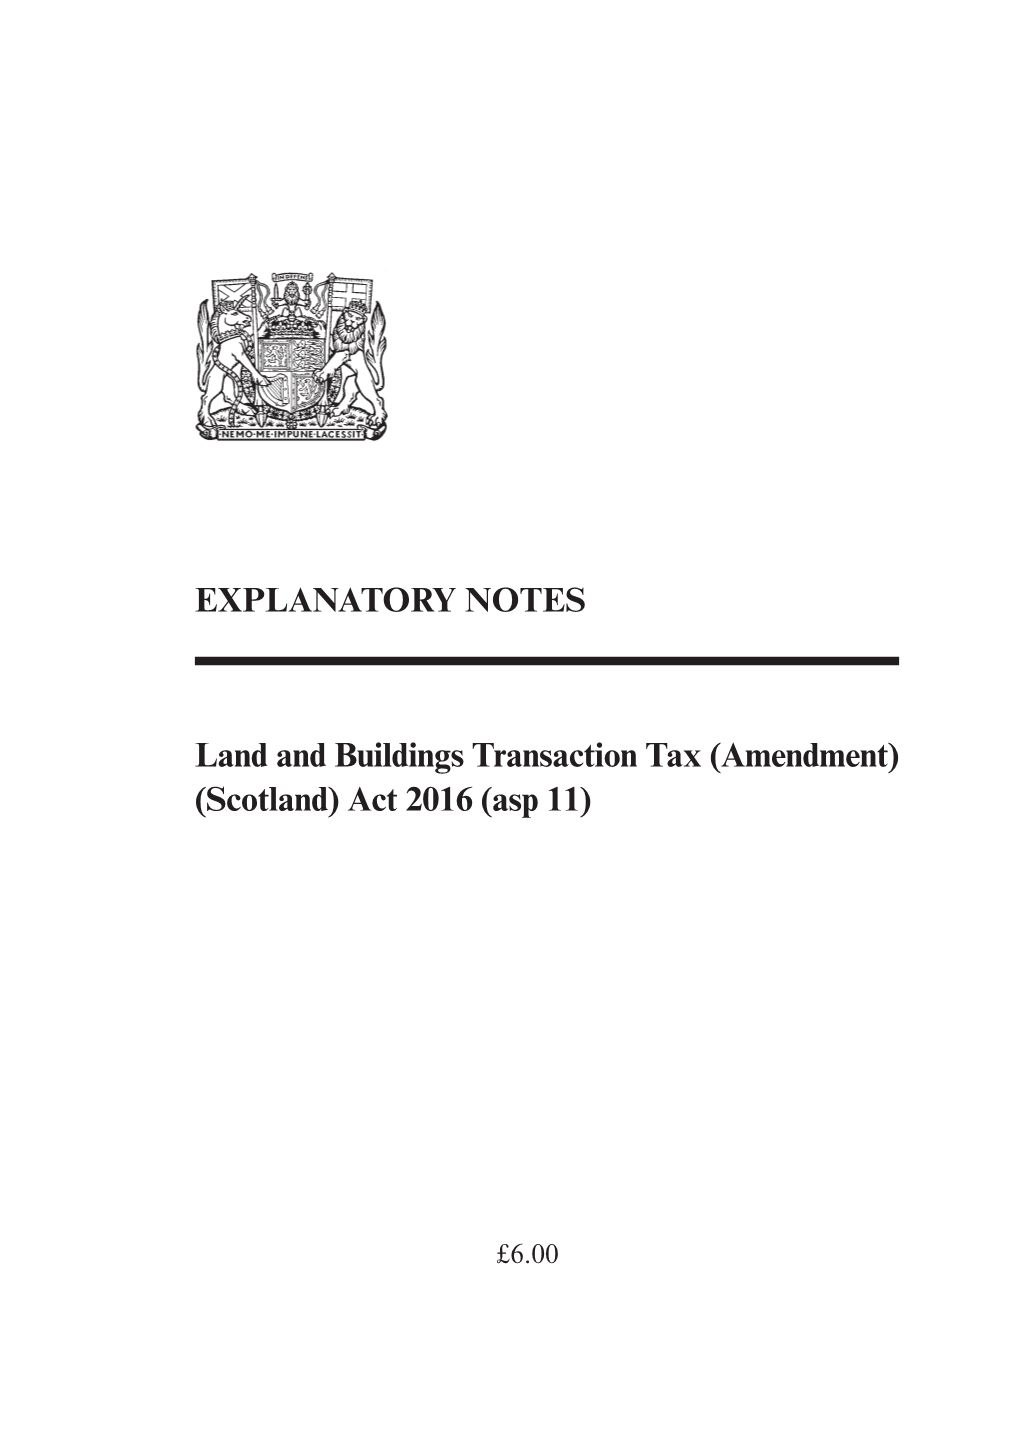 EXPLANATORY NOTES Land and Buildings Transaction Tax (Amendment) (Scotland) Act 2016 (Asp